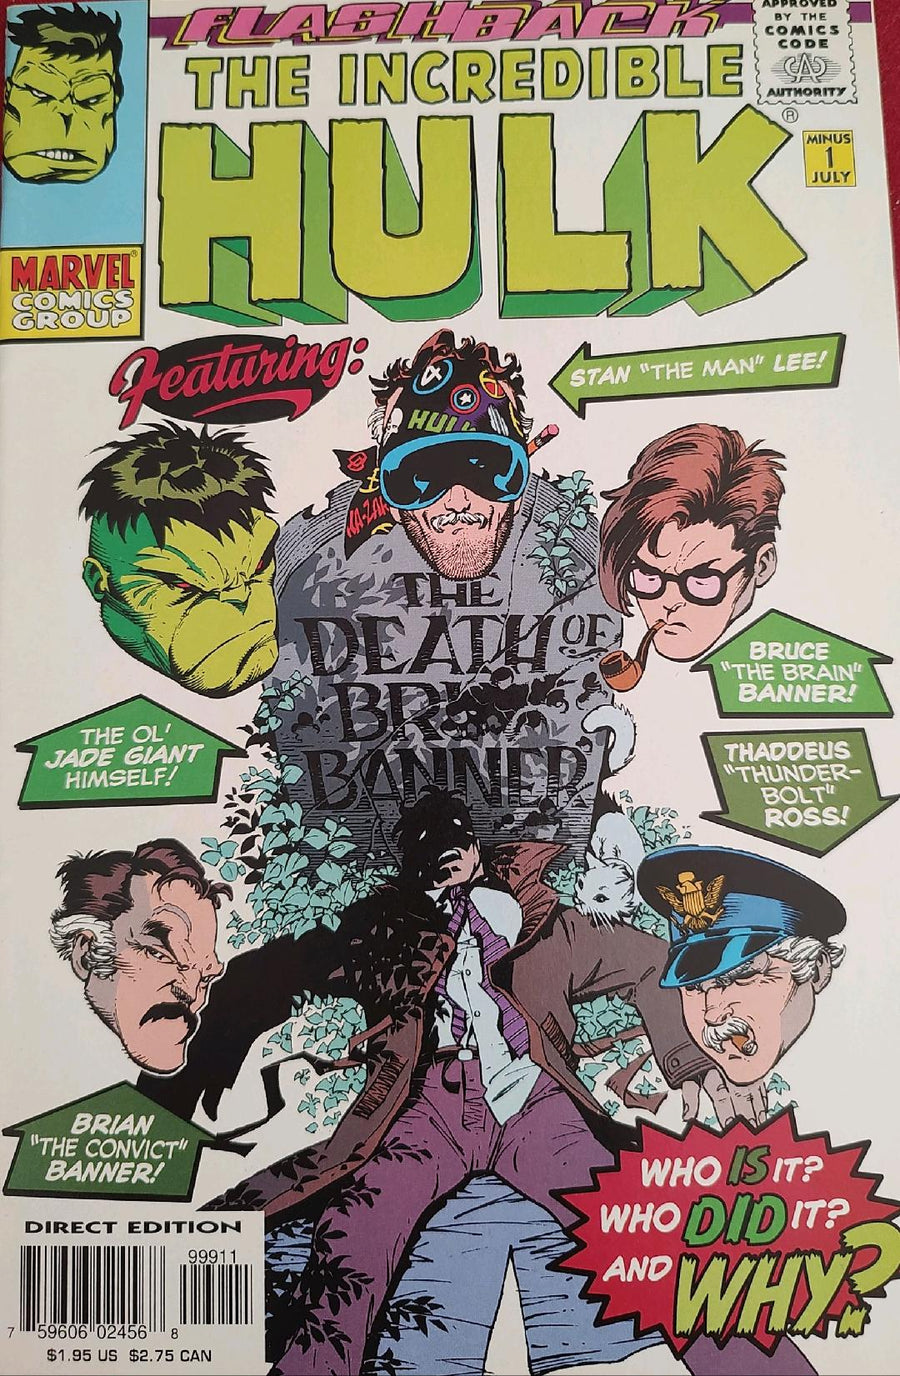 The Incredible Hulk #-1 Flashback Comic Book Cover